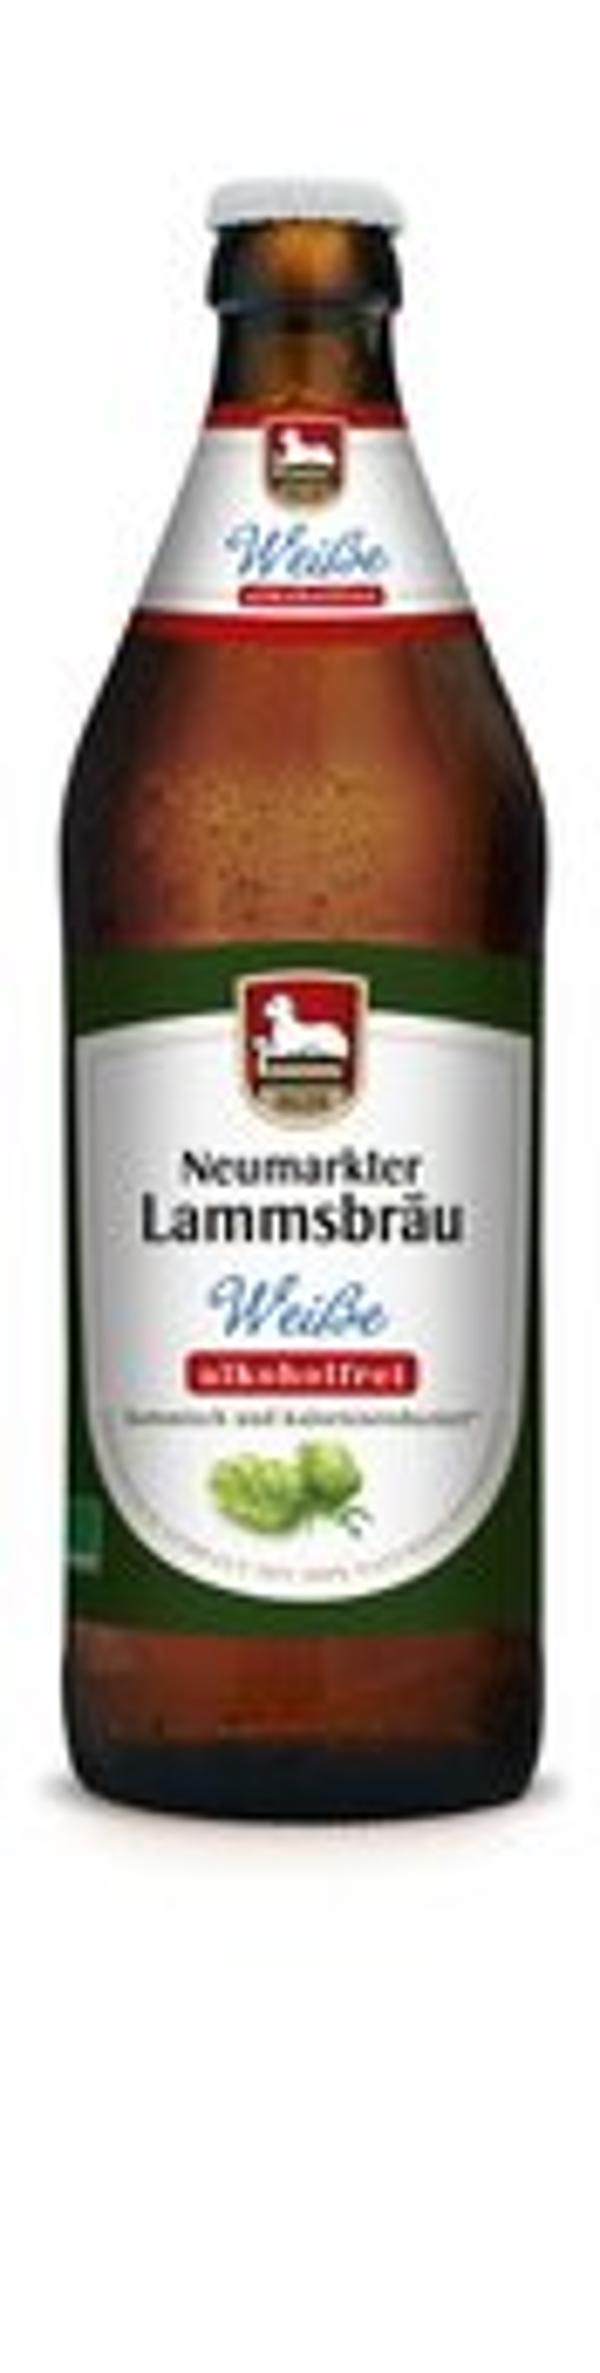 Produktfoto zu Lammsbräu Weiße alkoholfei 0,5l